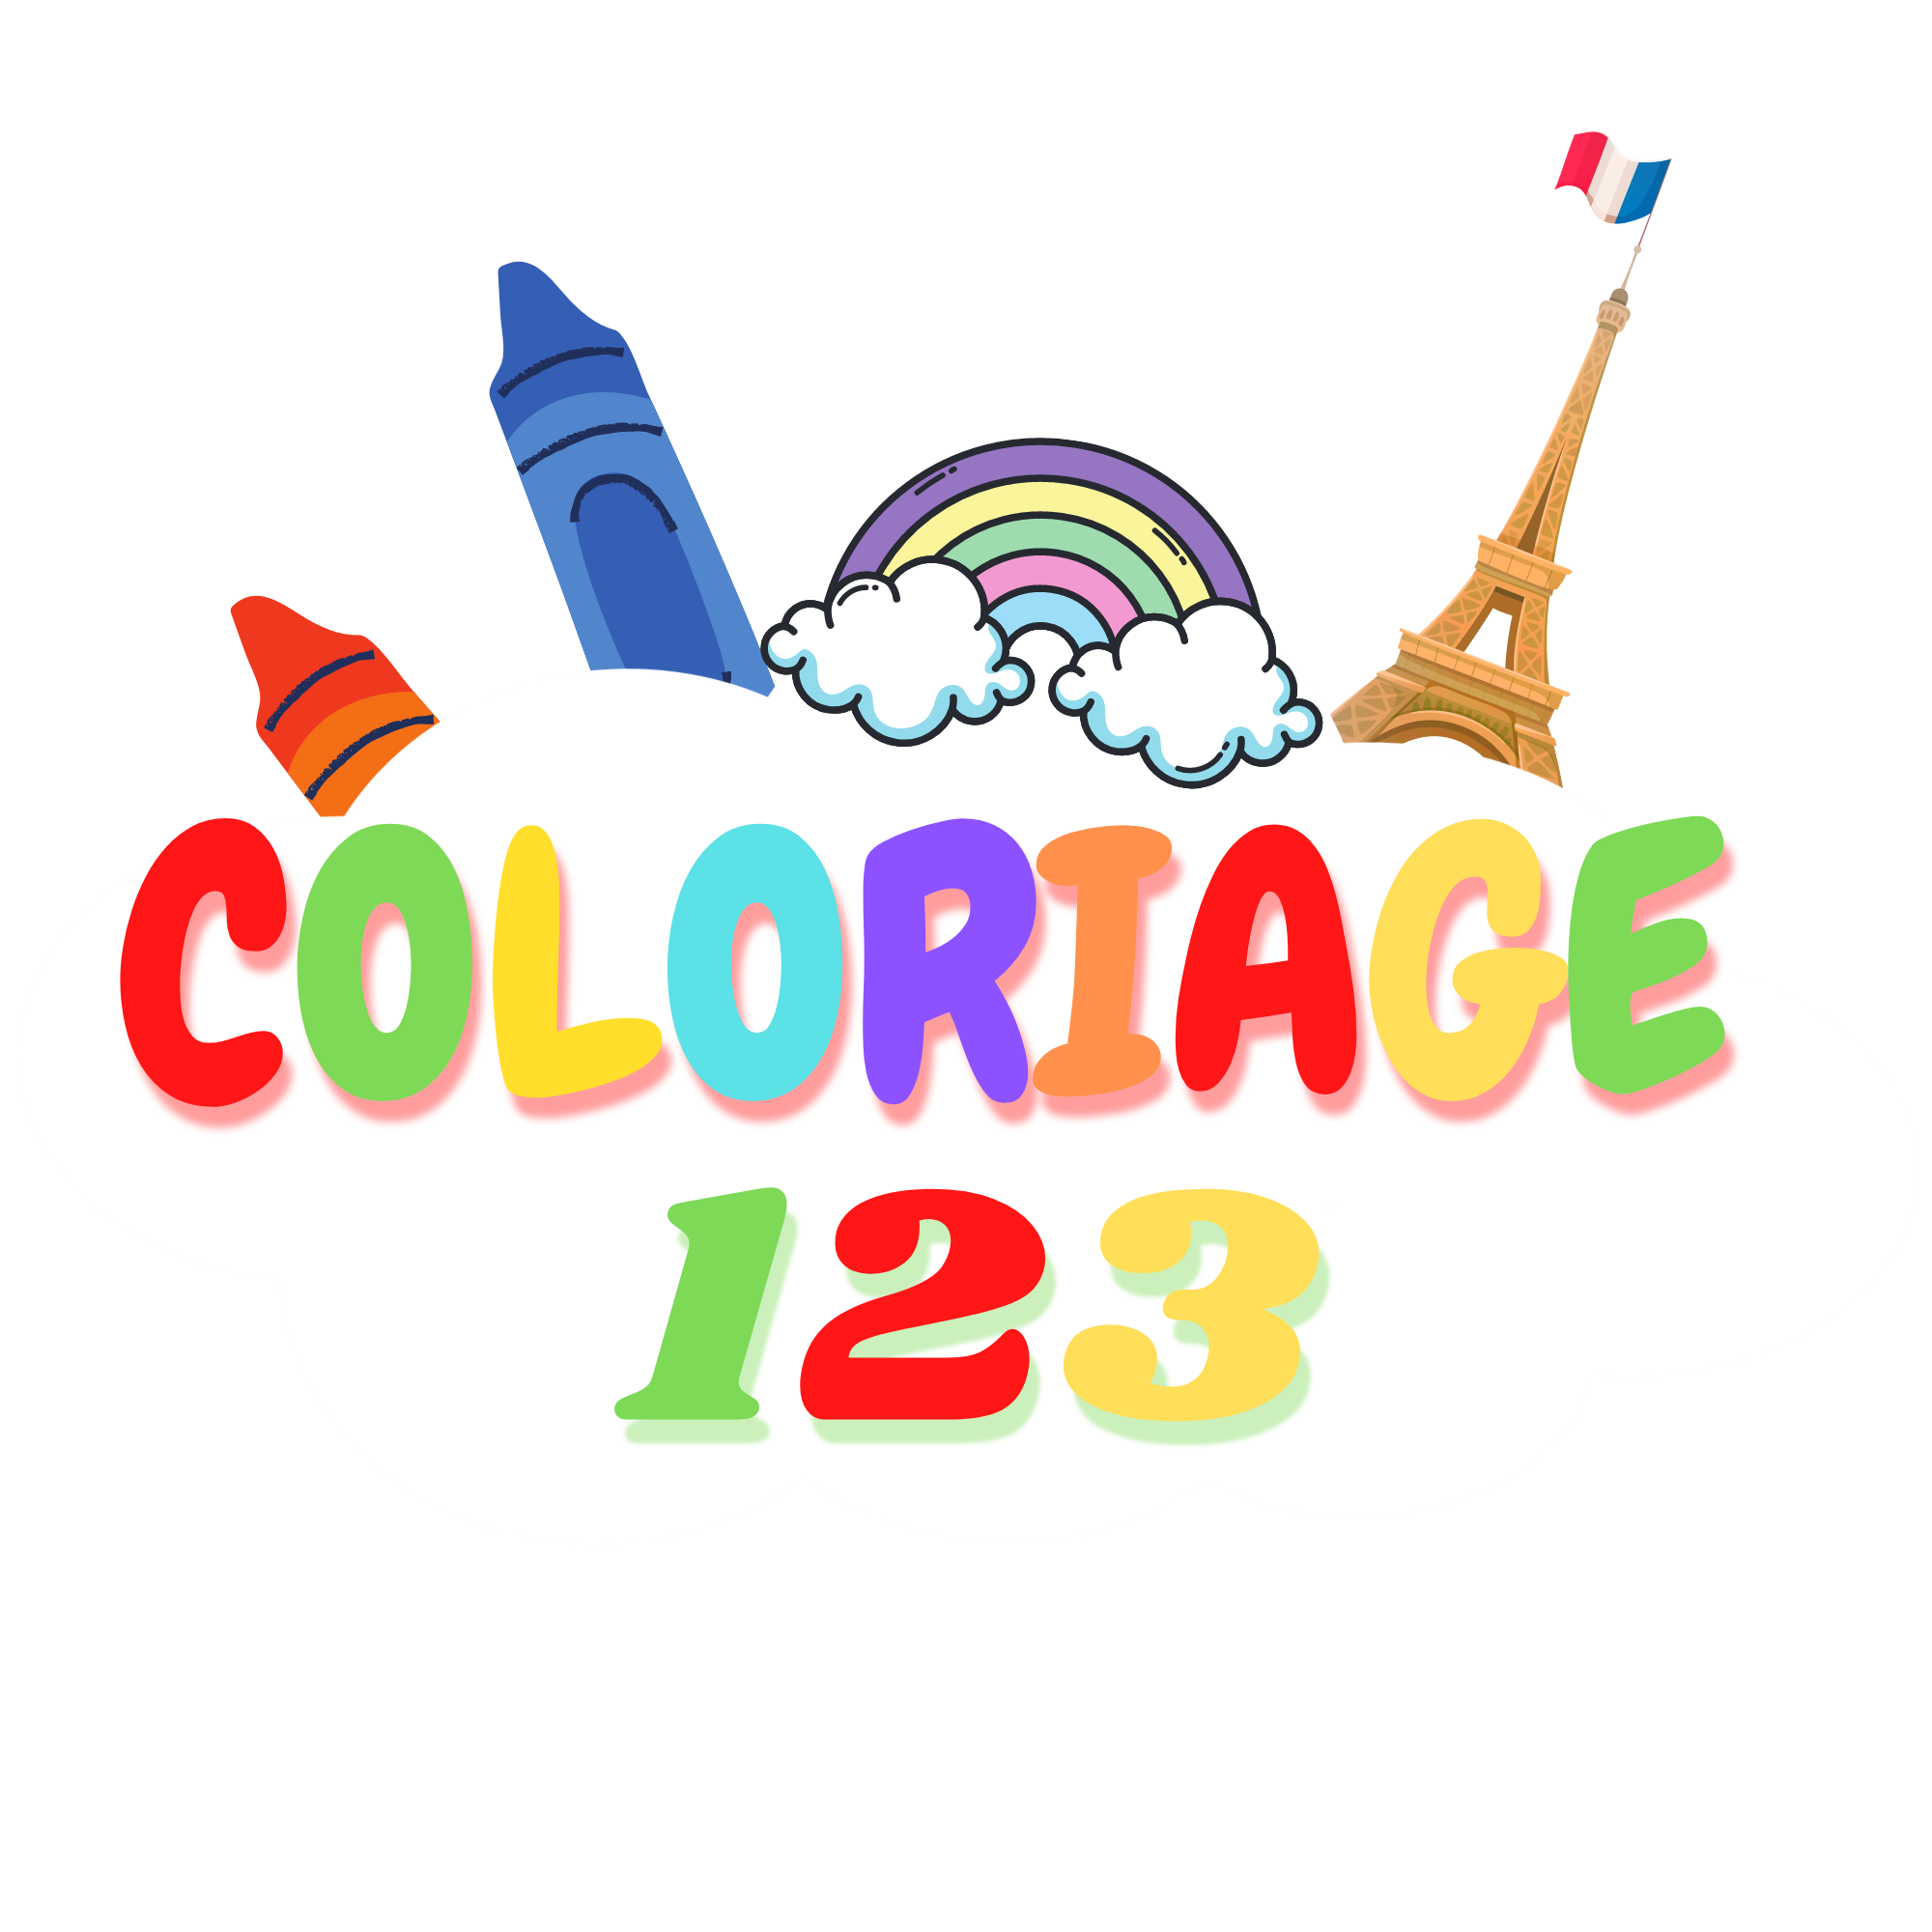 coloriage123